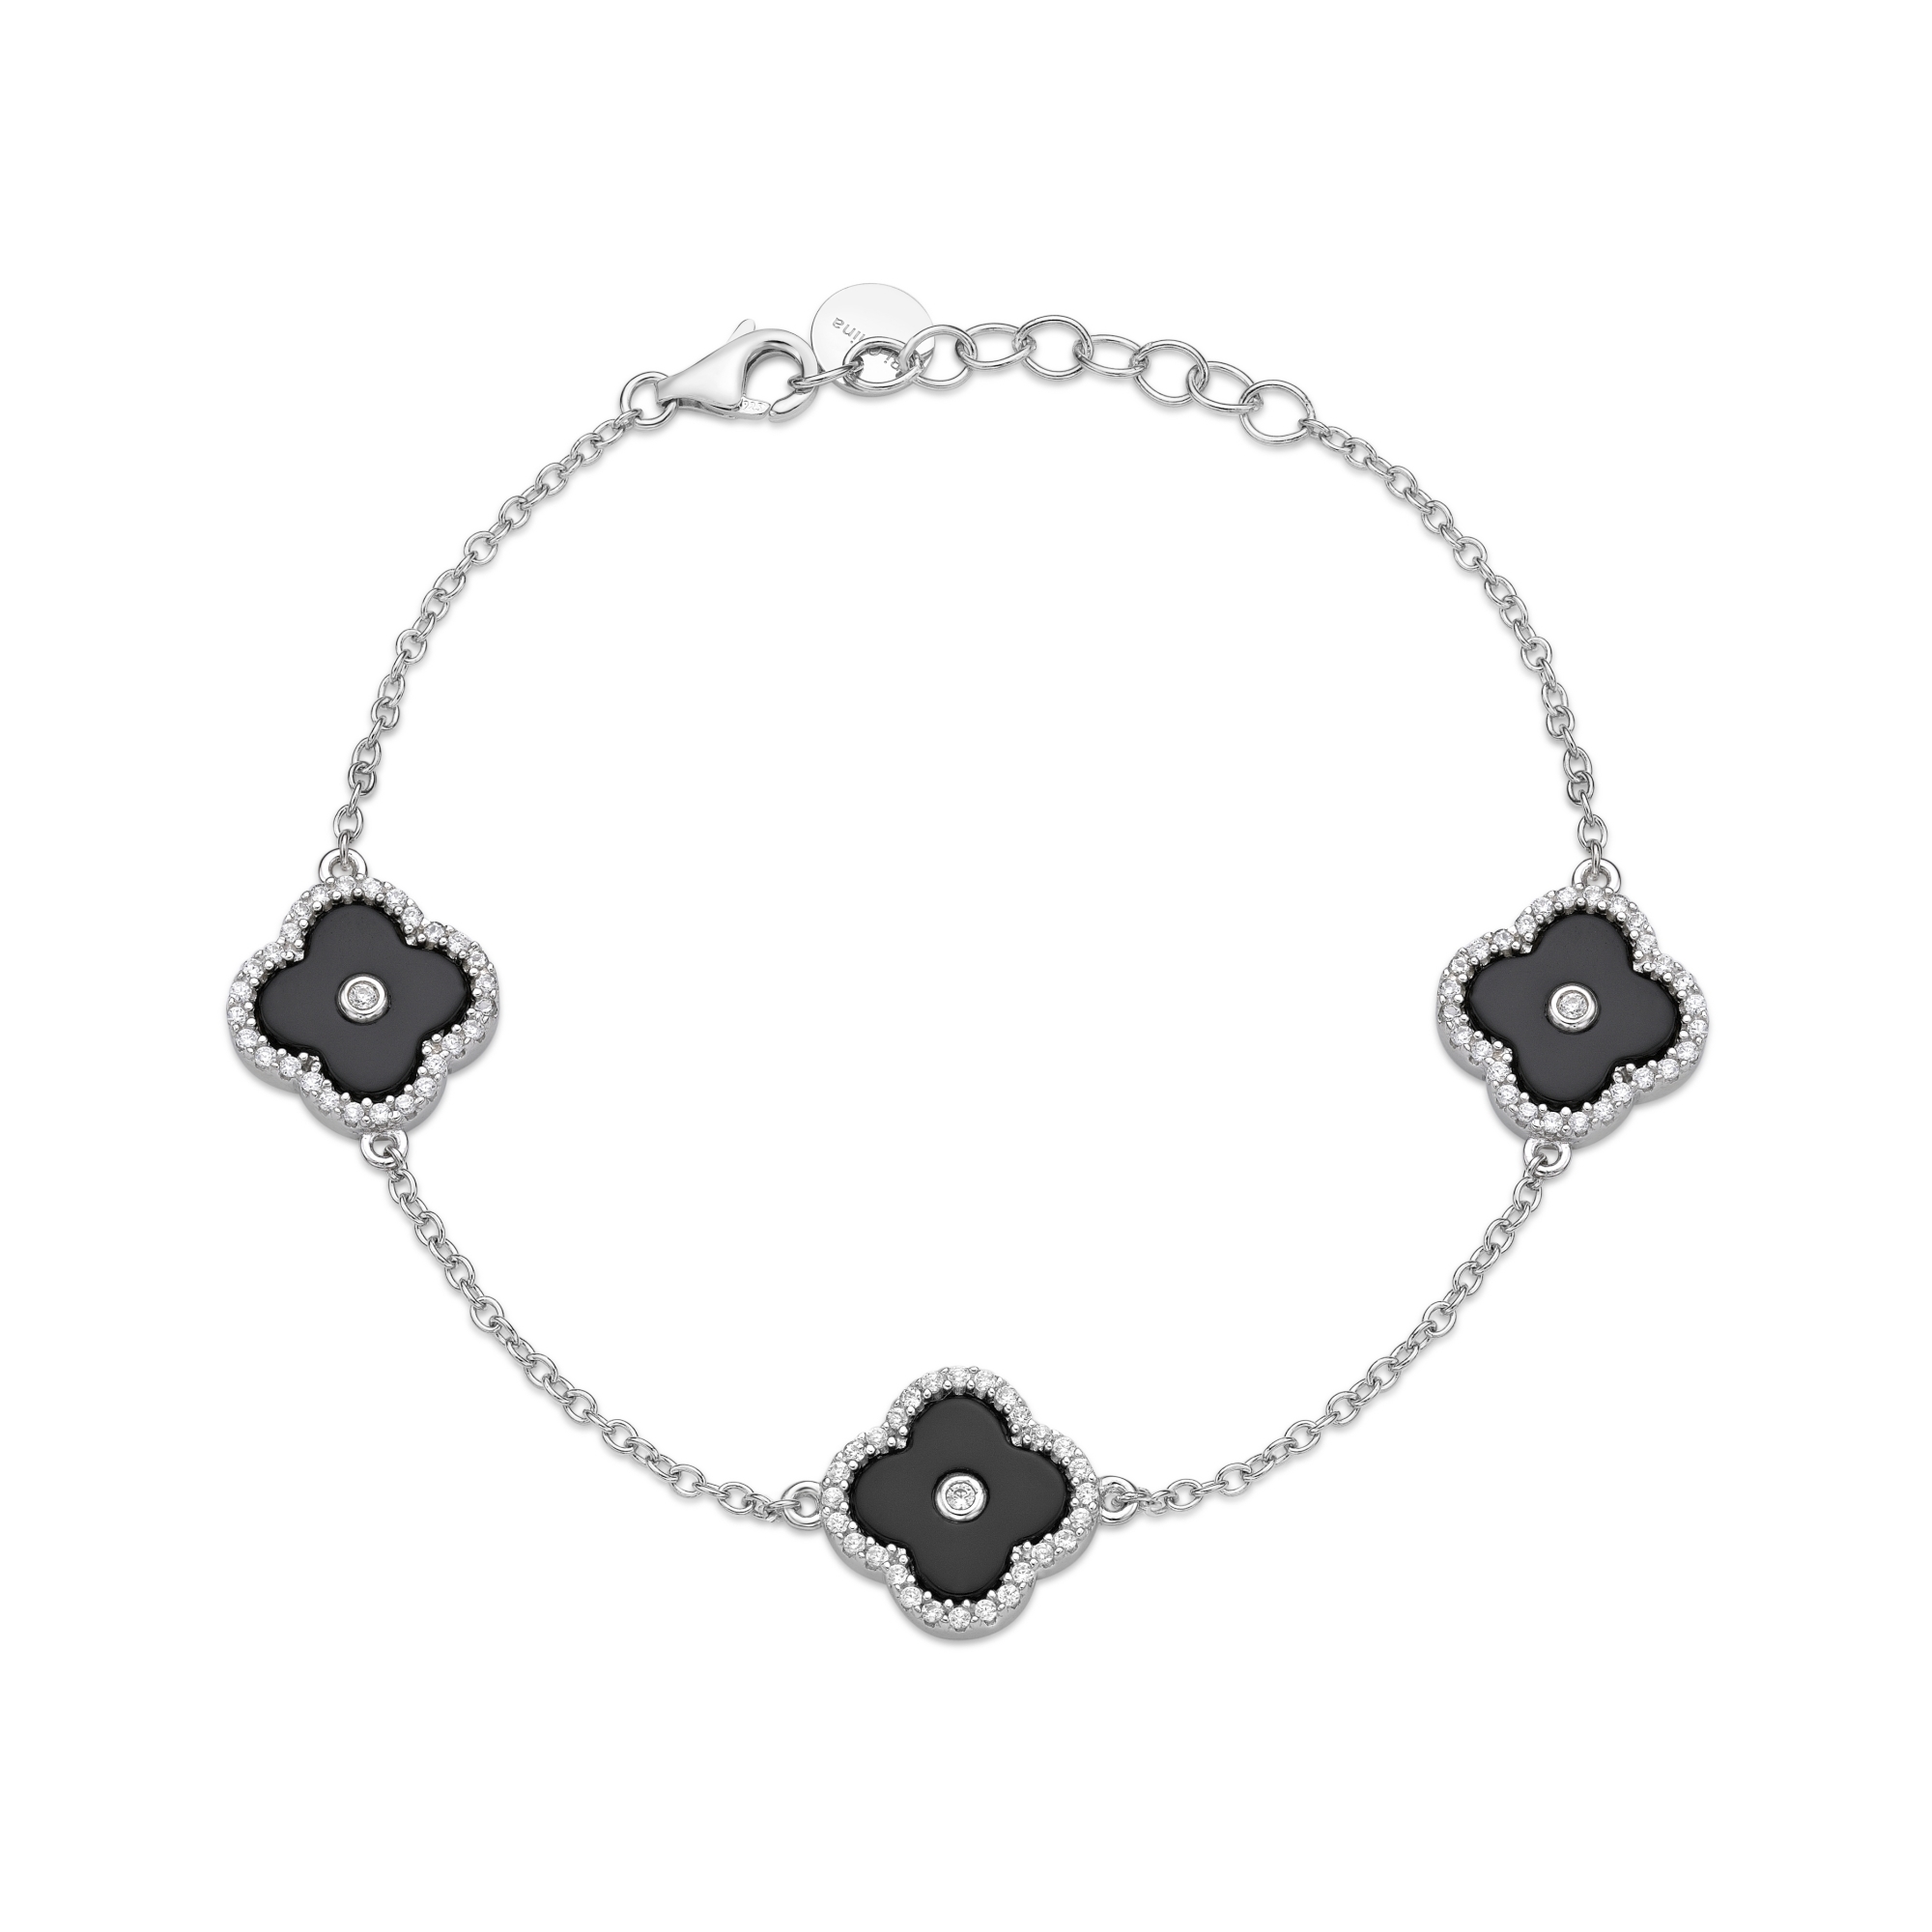 Lavari Jewelers Women's Black Onyx Triple Flower Bracelet, 925 Sterling Silver, Cubic Zirconia, 7 Inches